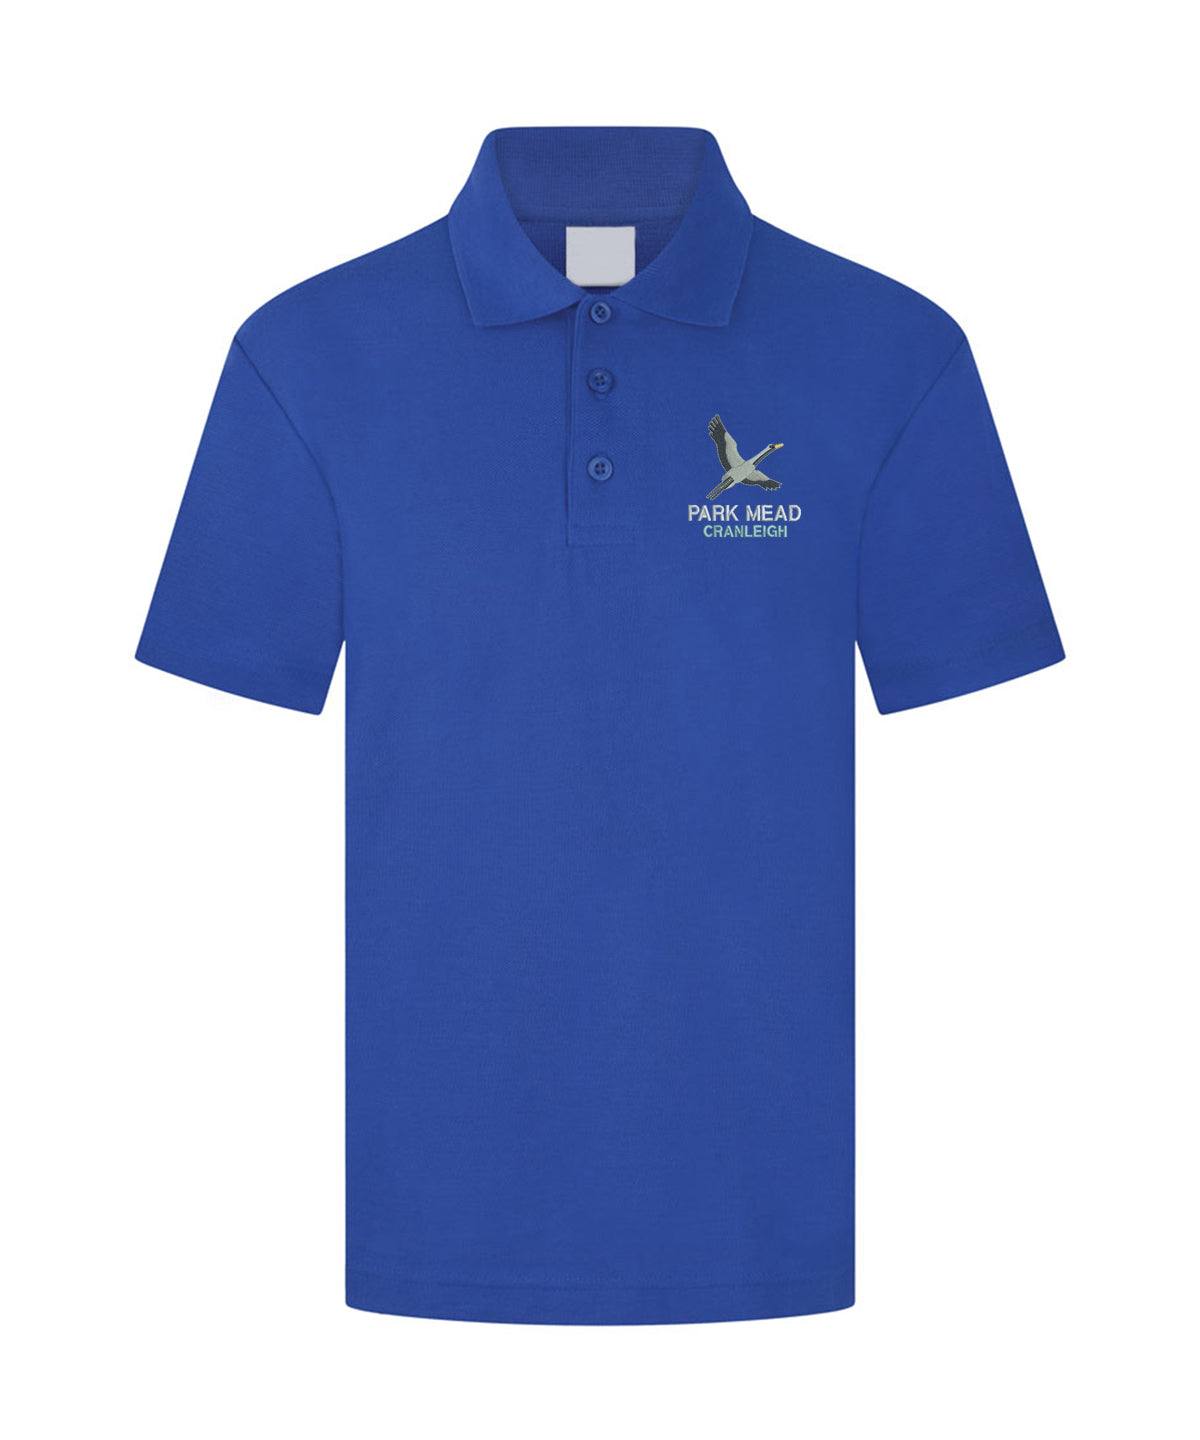 Park Mead Primary School School - Polo Shirt Pale Blue logo - School Uniform Shop